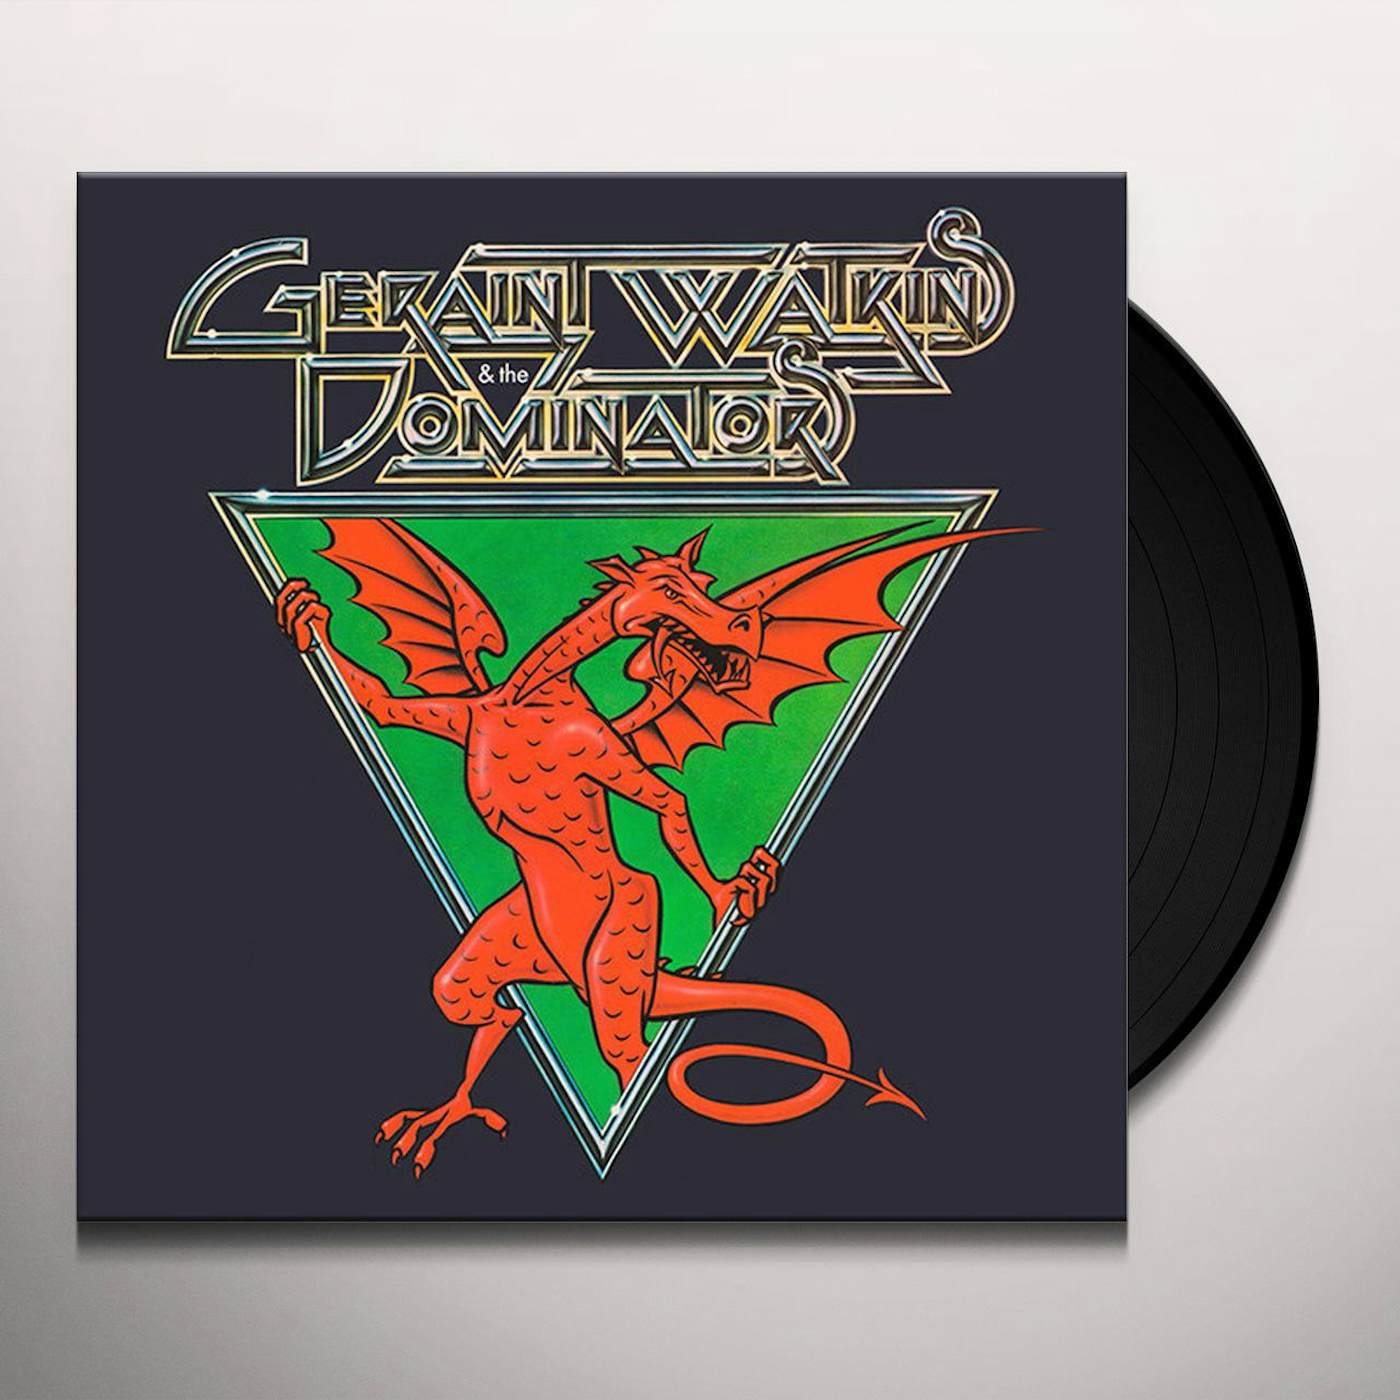 Geraint Watkins & The Dominators Vinyl Record